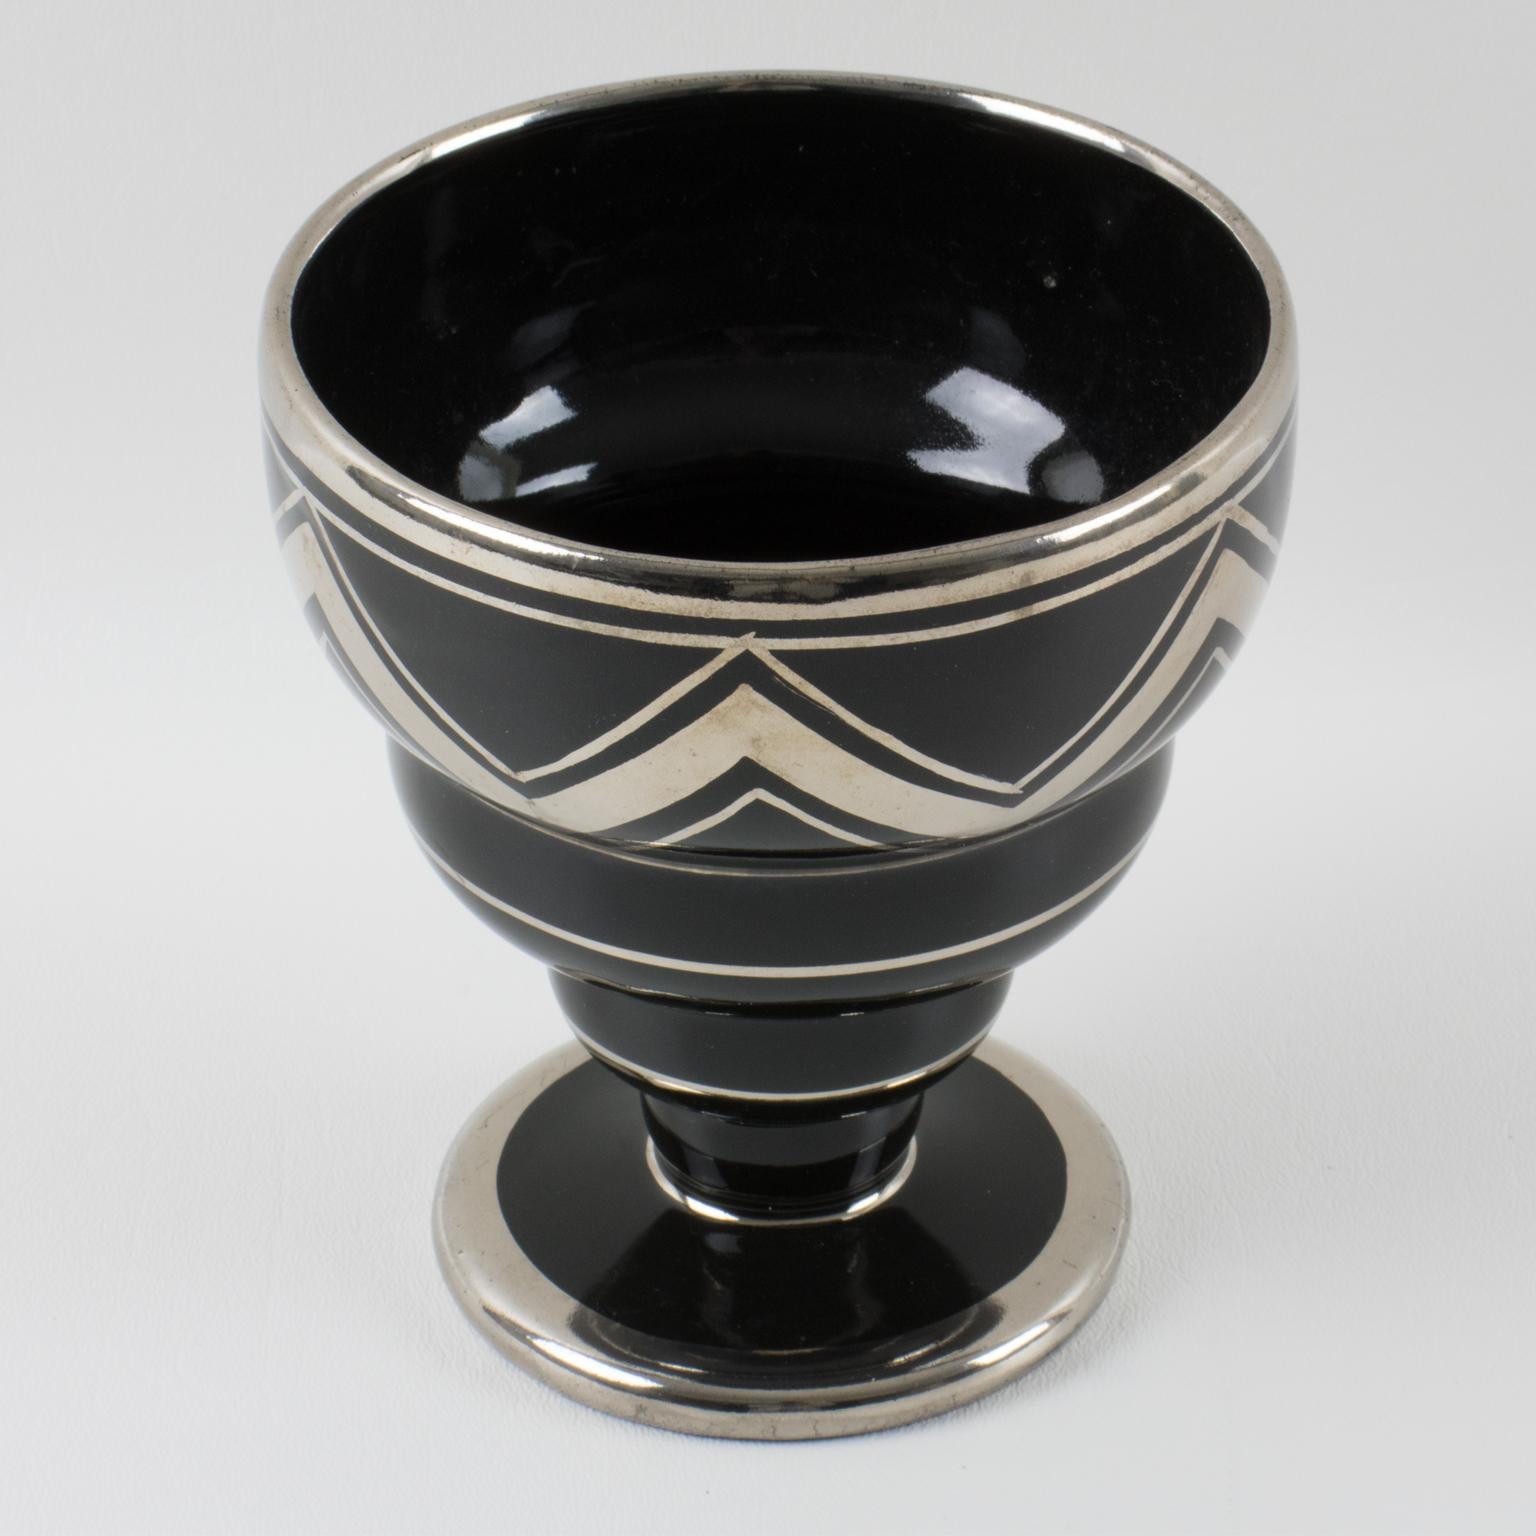 Art Deco Silver Overlay and Black Ceramic Vase by Ceram France, 1930s For Sale 1